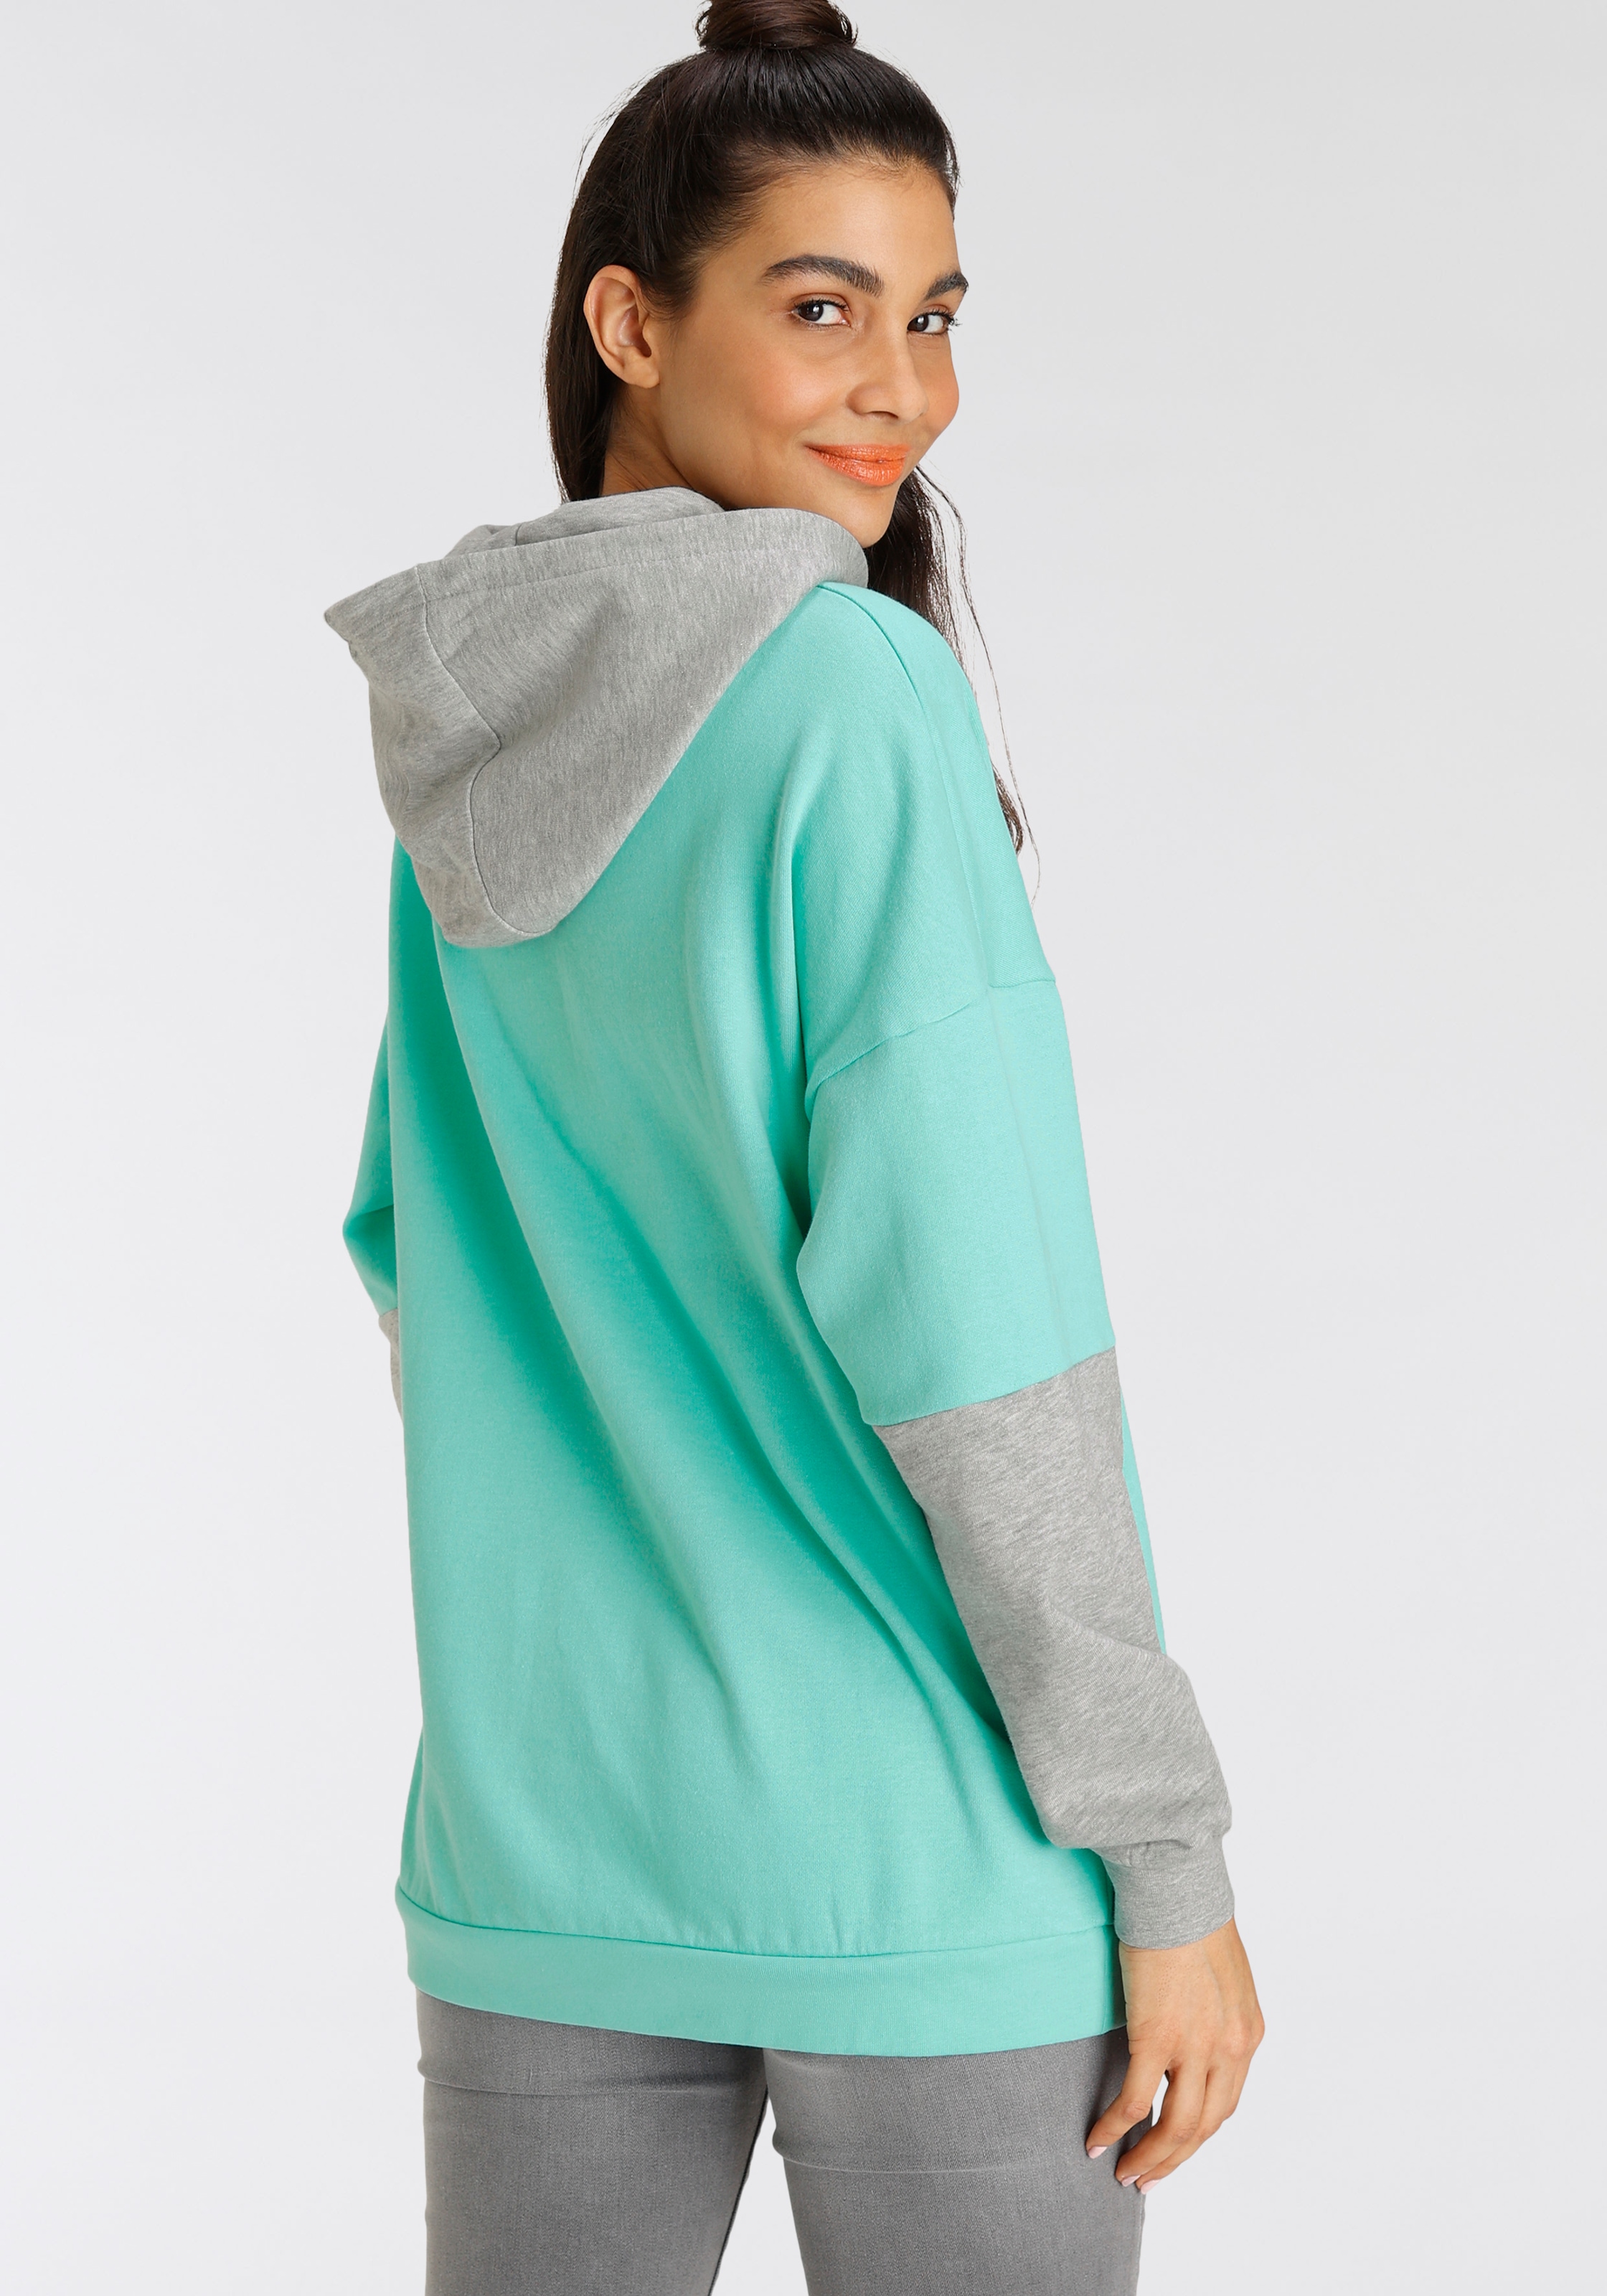 KangaROOS Kapuzensweatshirt, in cooler Oversize-Form mit großen Logoschriftzug - NEUE KOLLEKTION